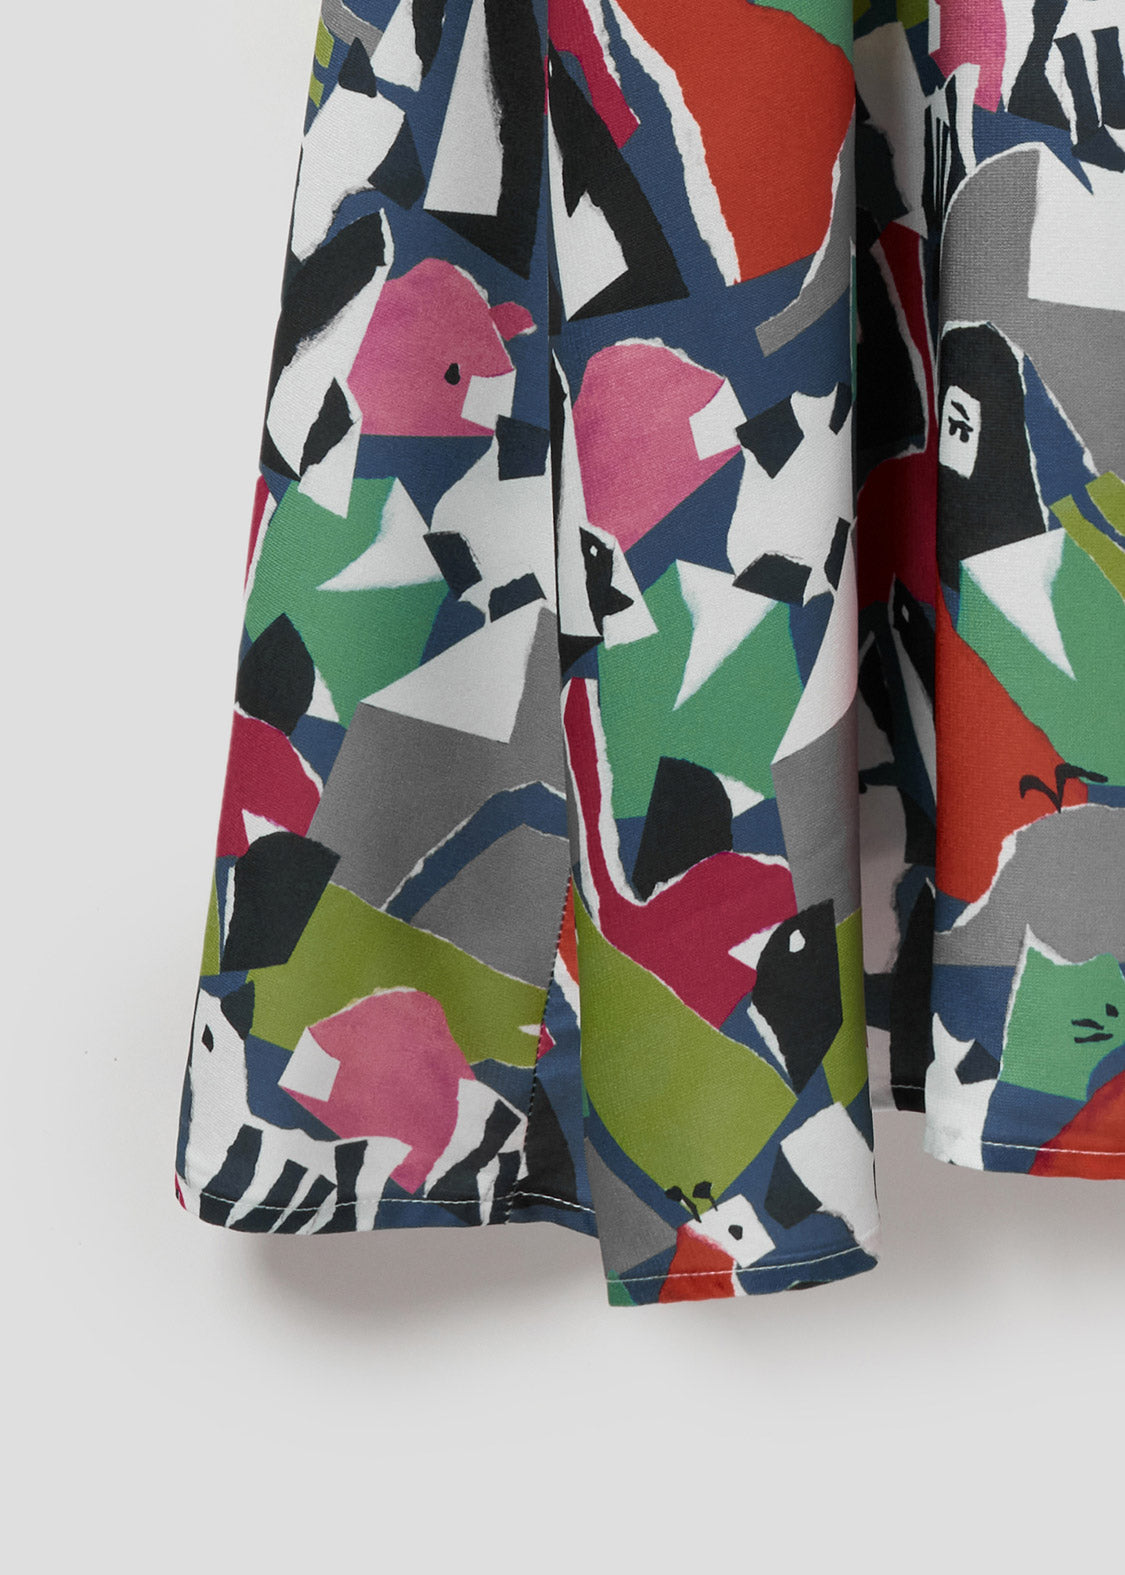 Flare Skirt (Torn Paper Animals)